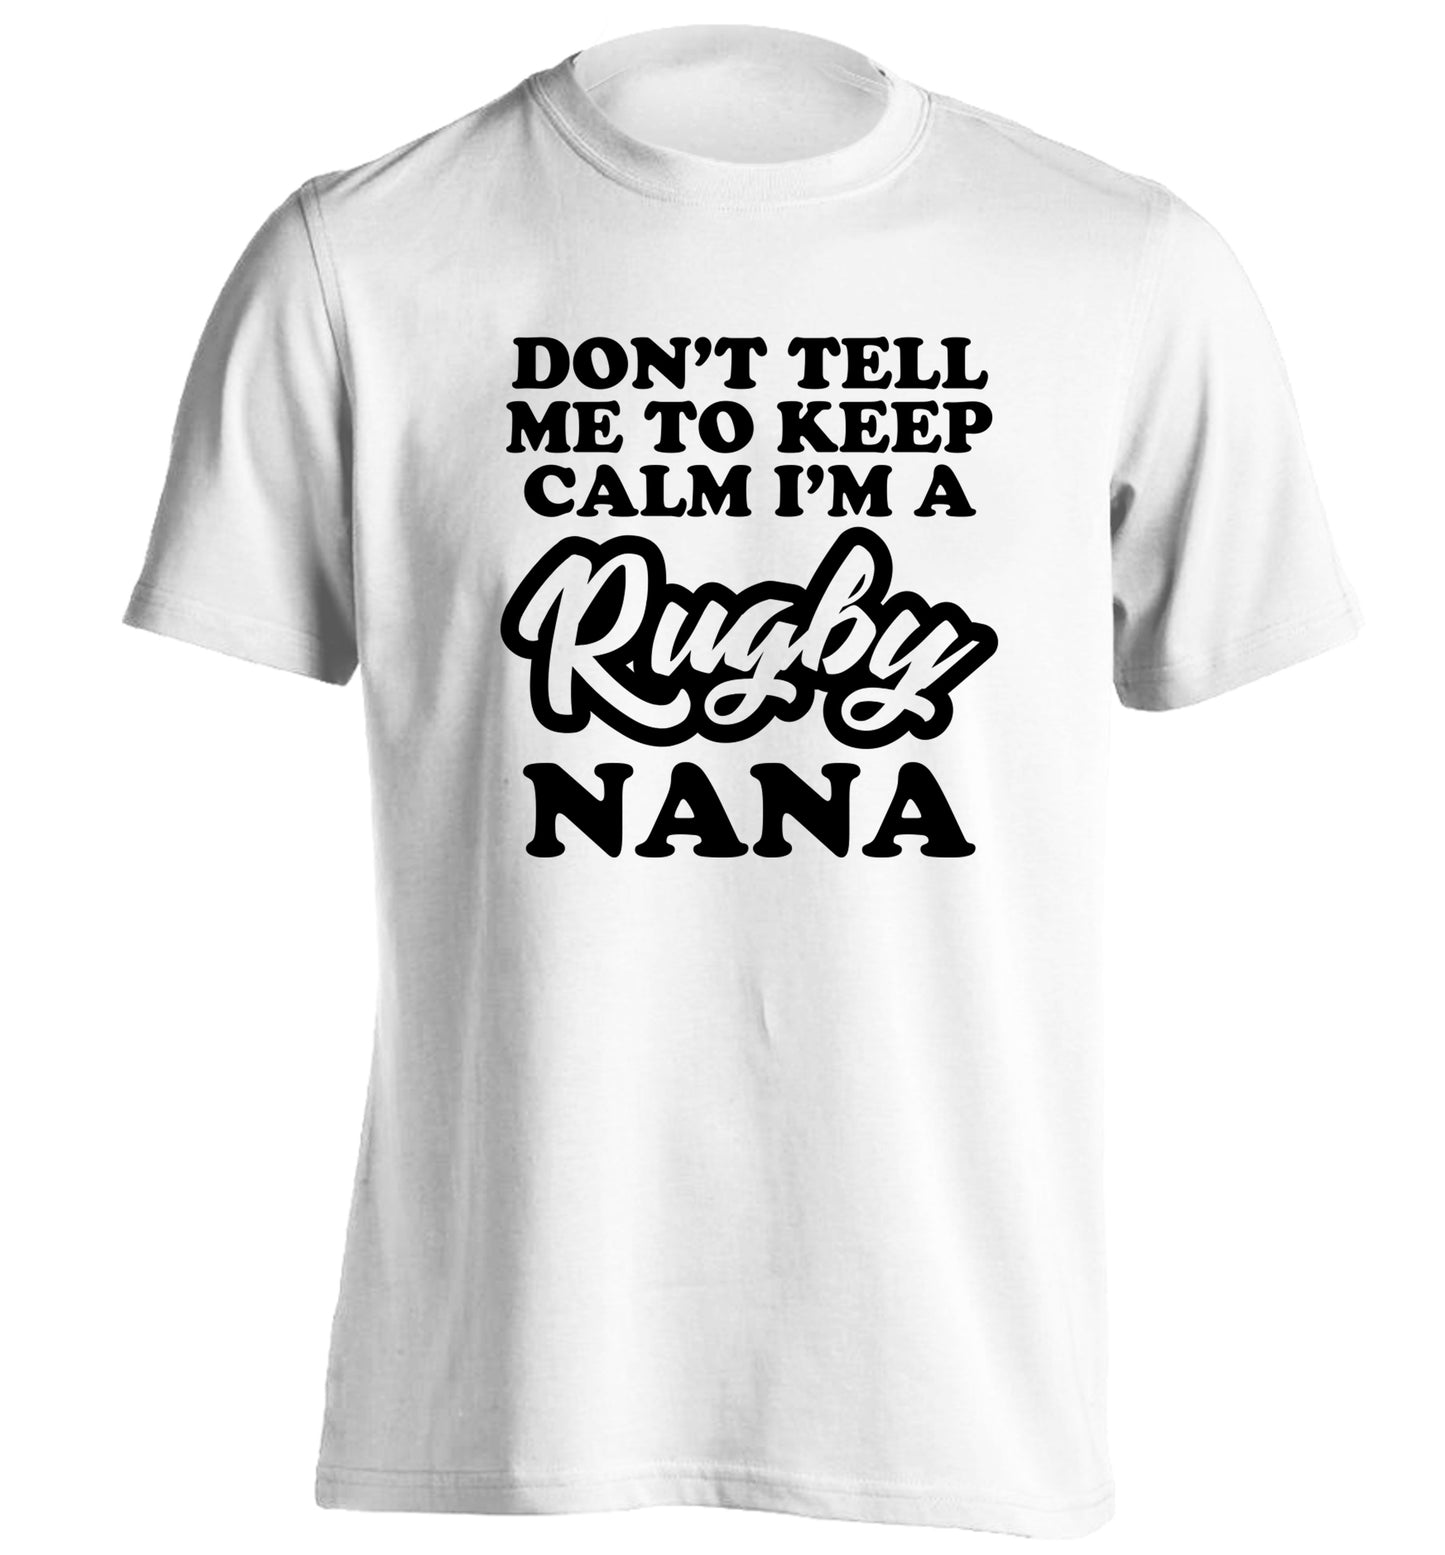 Don't tell me to keep calm I'm a rugby nana adults unisex white Tshirt 2XL